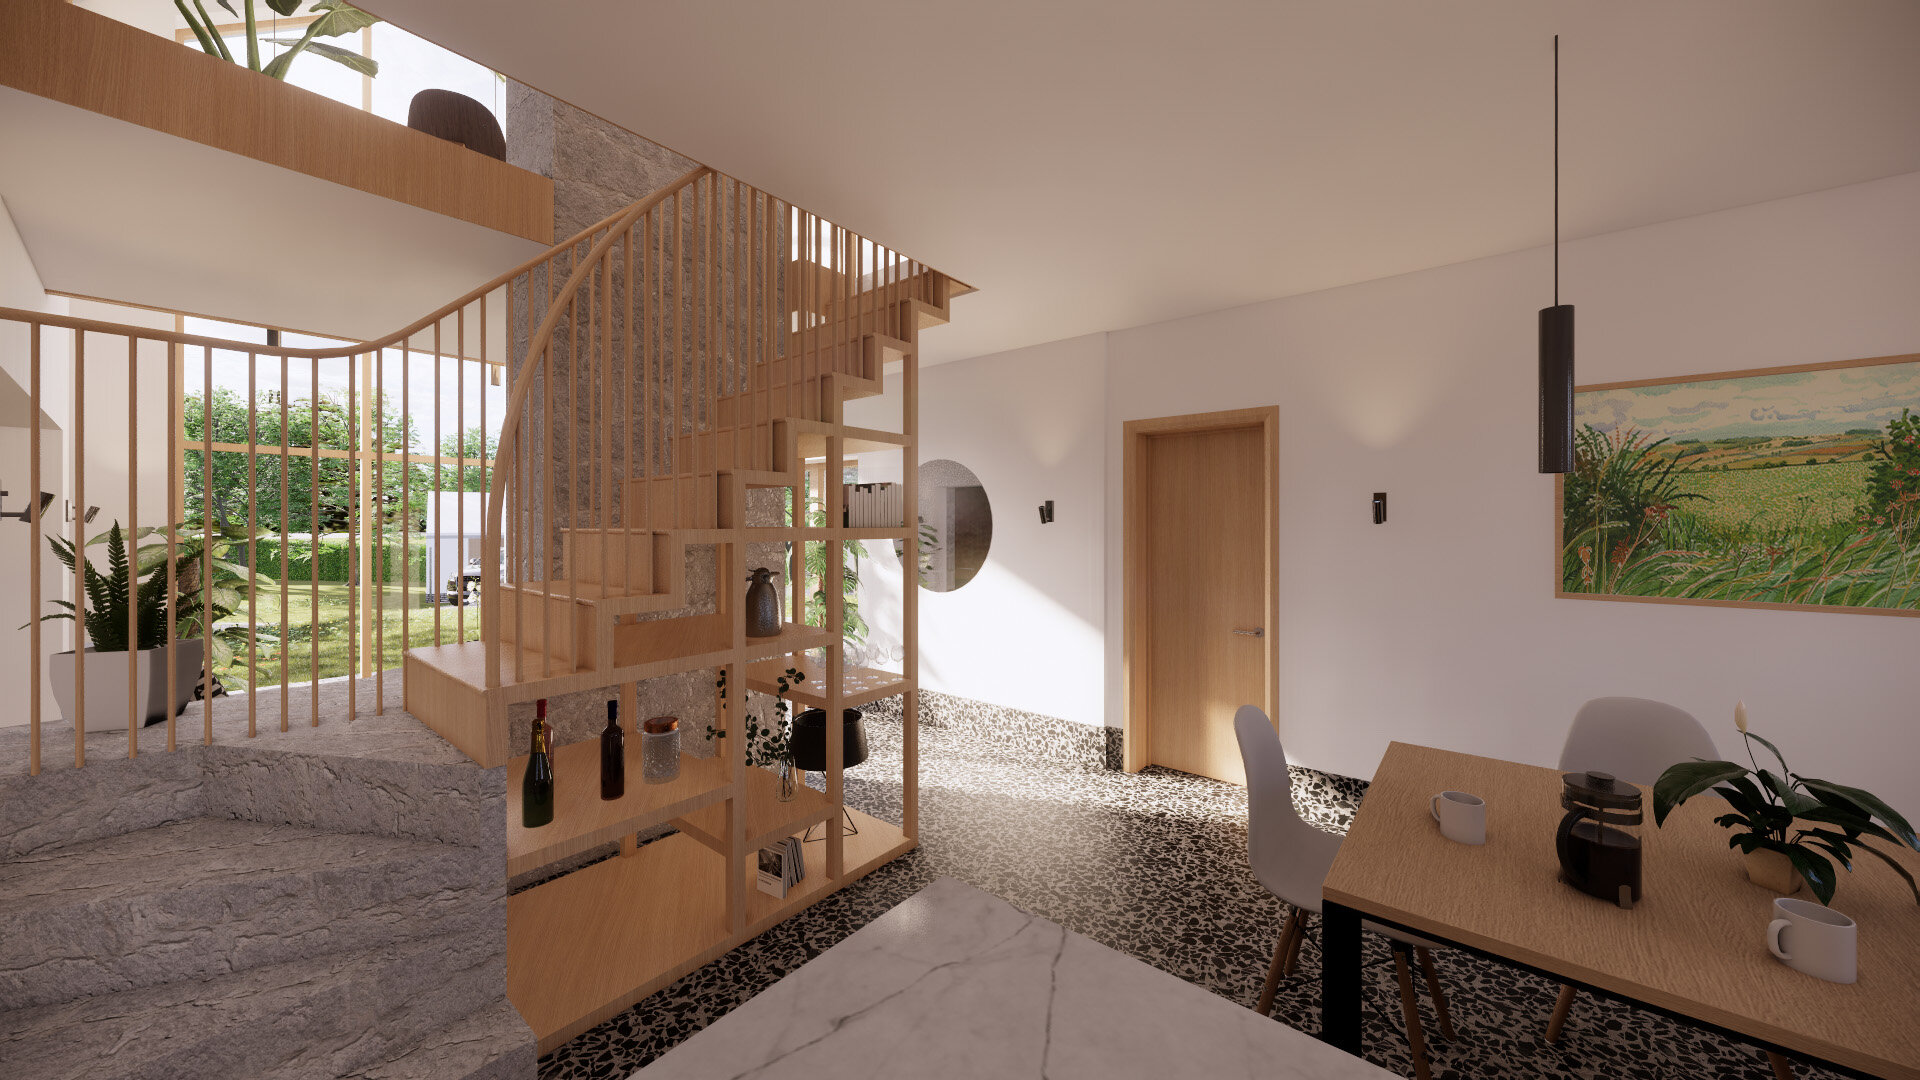 Central Staircase &amp; Dining Area - East Yorkshire Passivhaus - Bridlington Architects - Samuel Kendall Associates